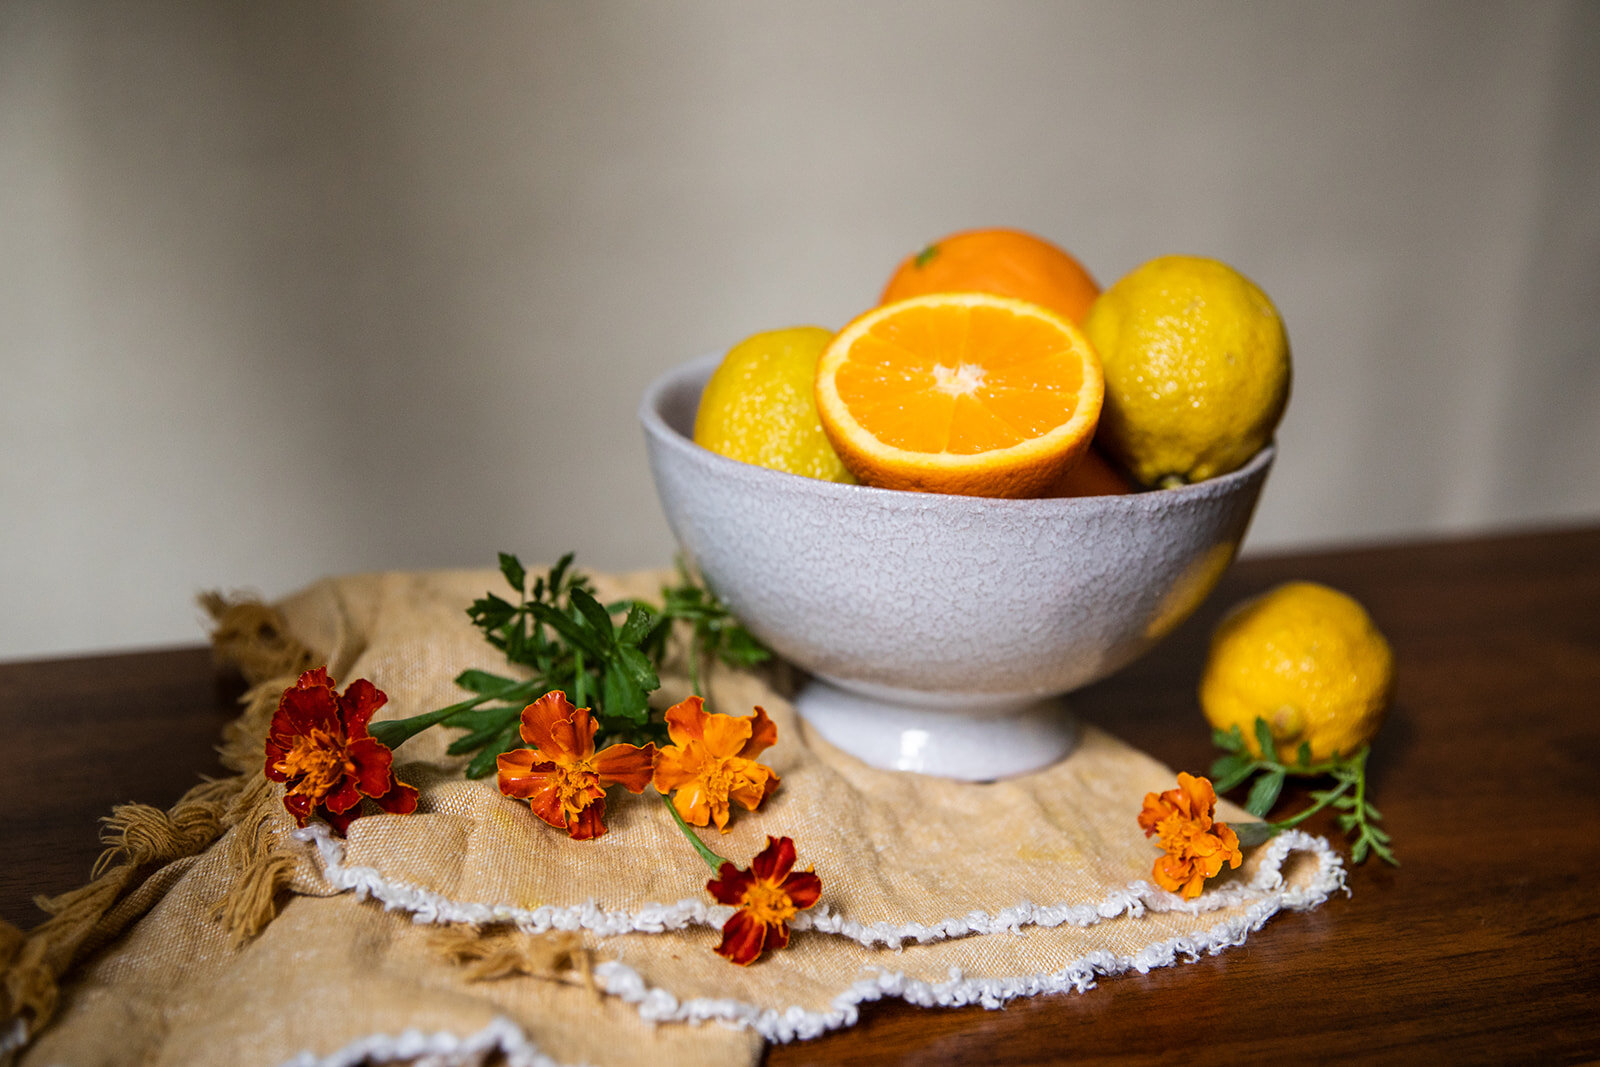  Marigold and orange still life | Be Mindful Skincare | Sarah Mattozzi Photography 